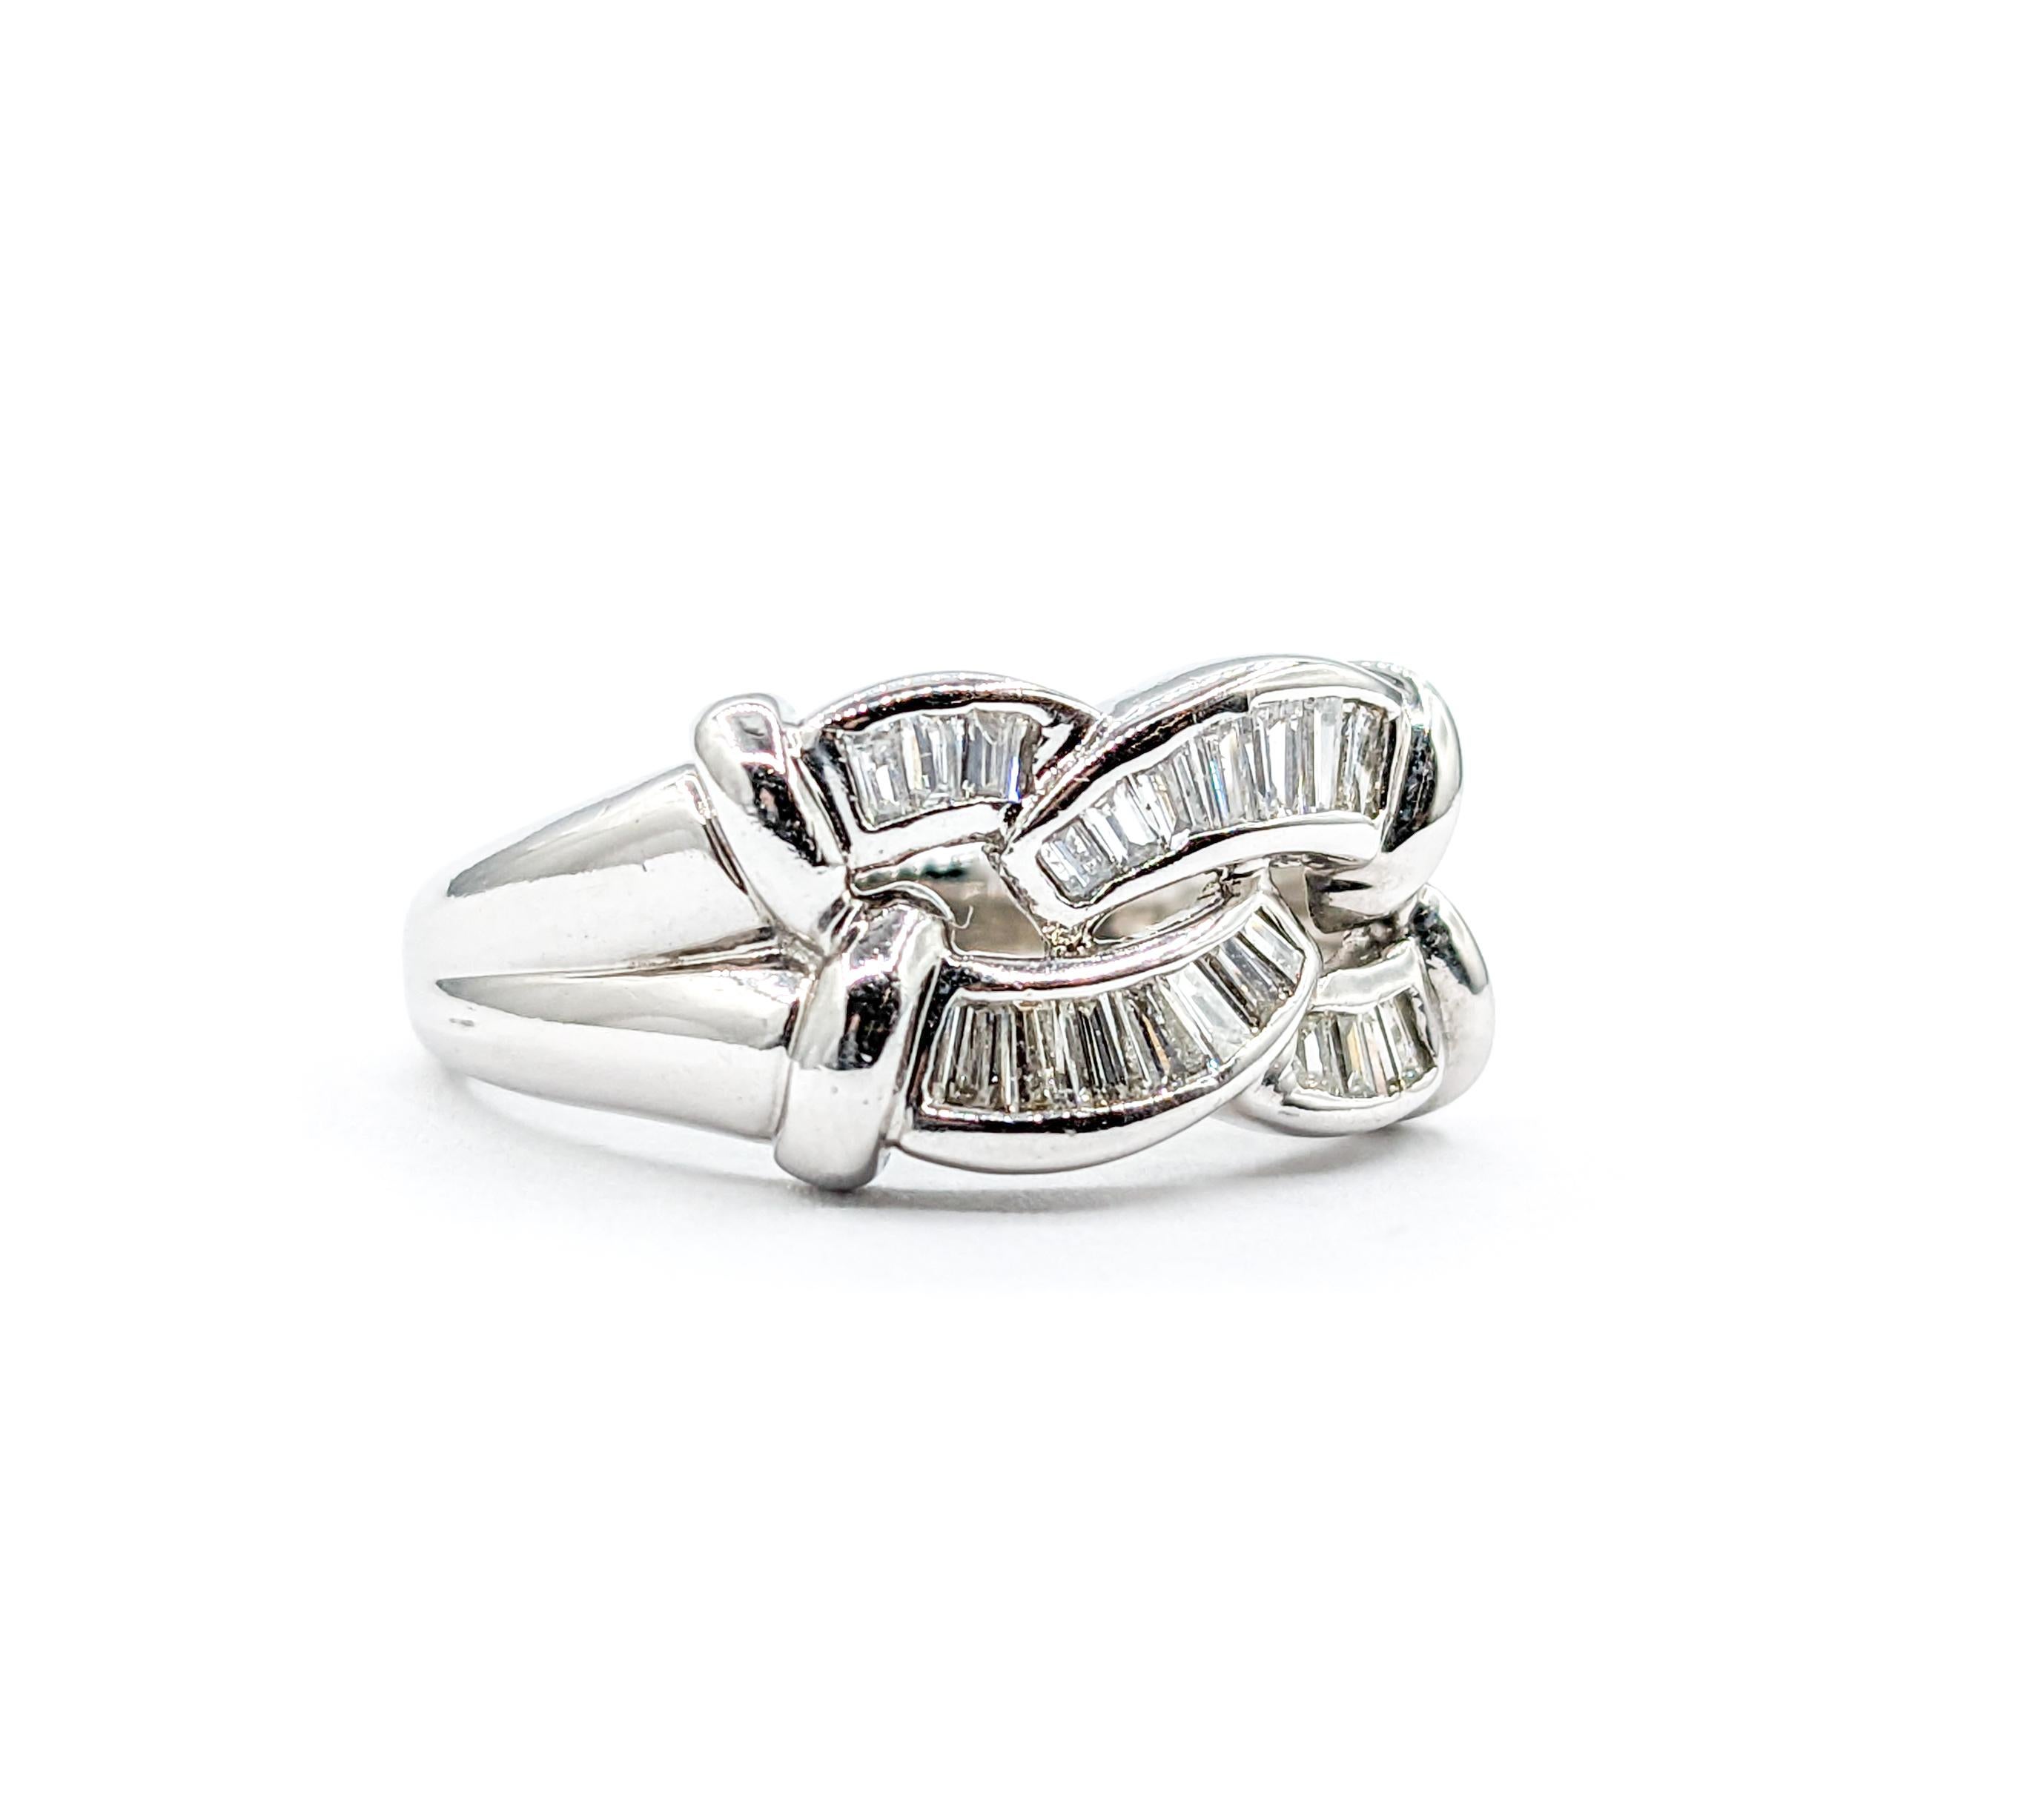 Baguette Cut Diamond Ring In 18k White Gold For Sale 2